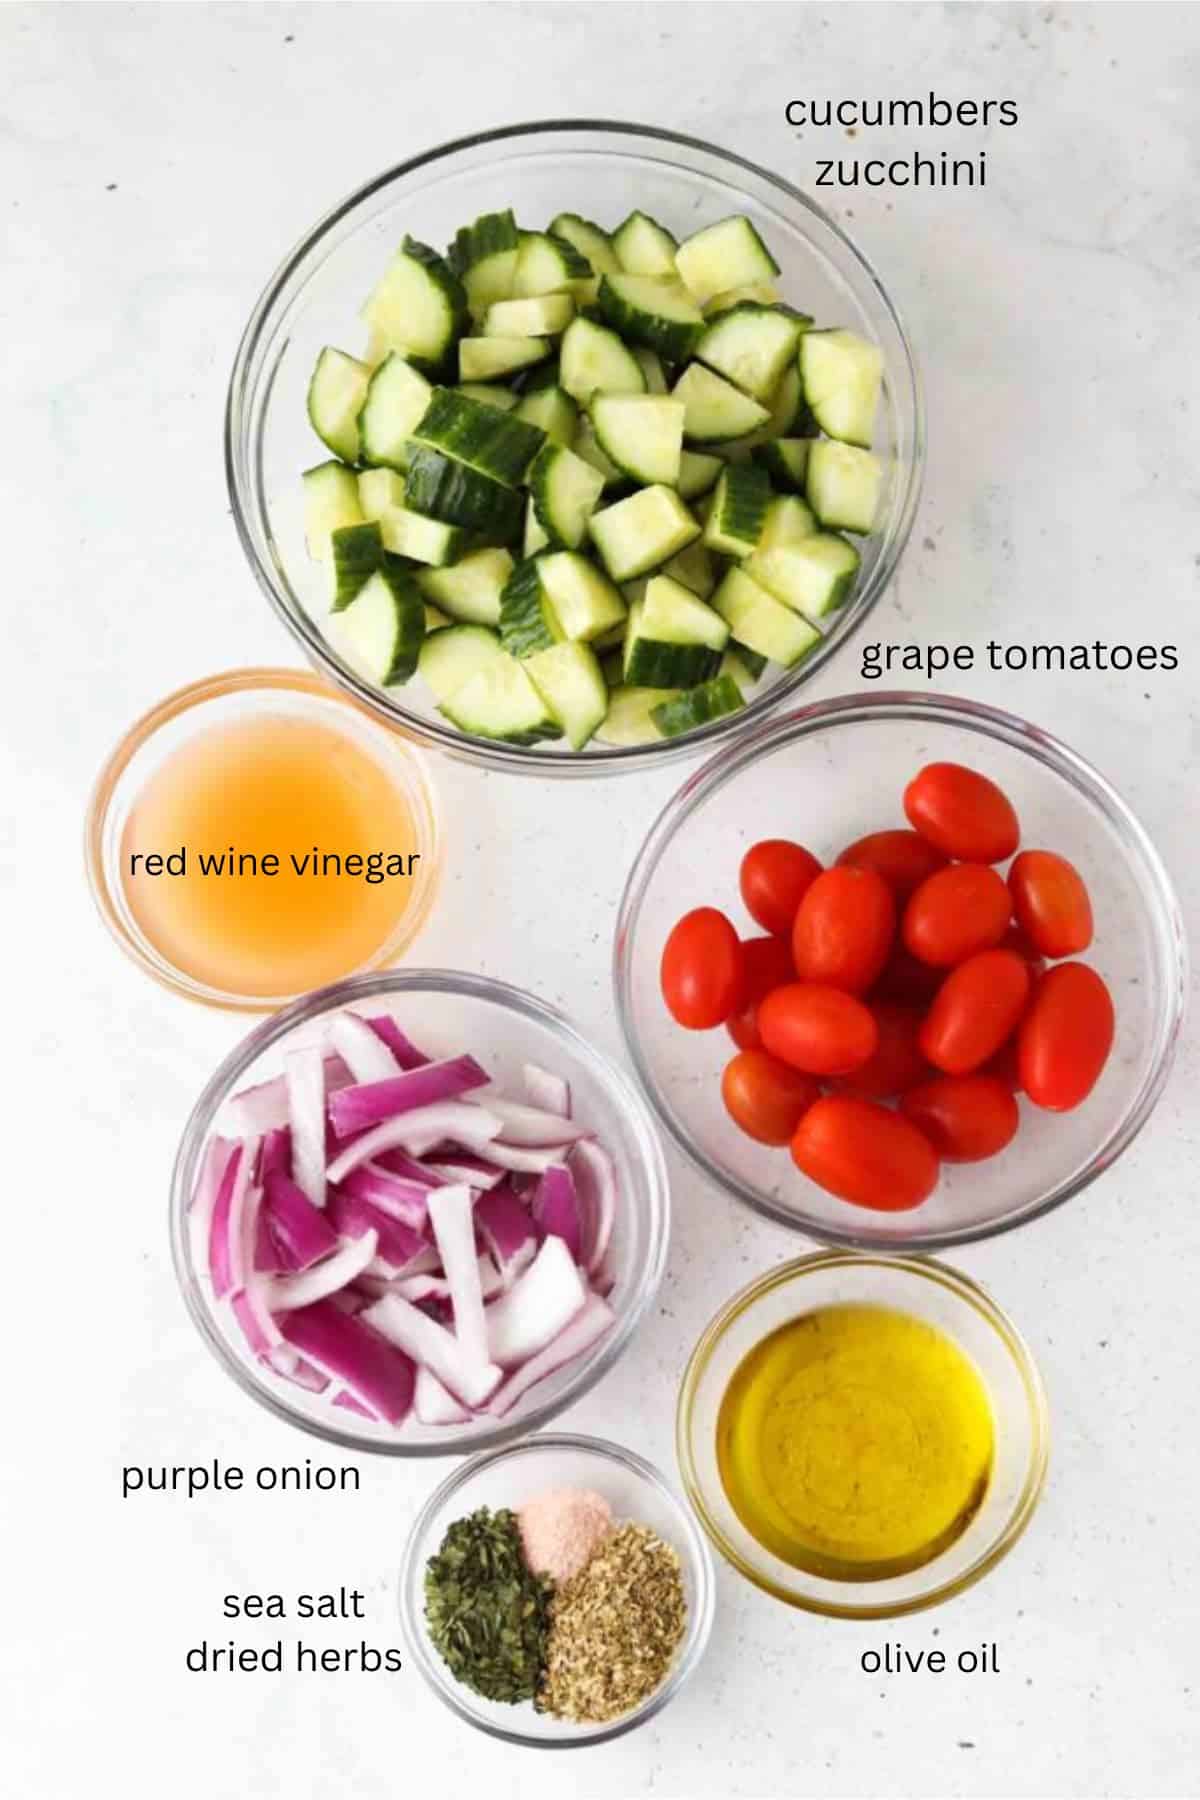 Greek salad ingredients in glass bowls. 